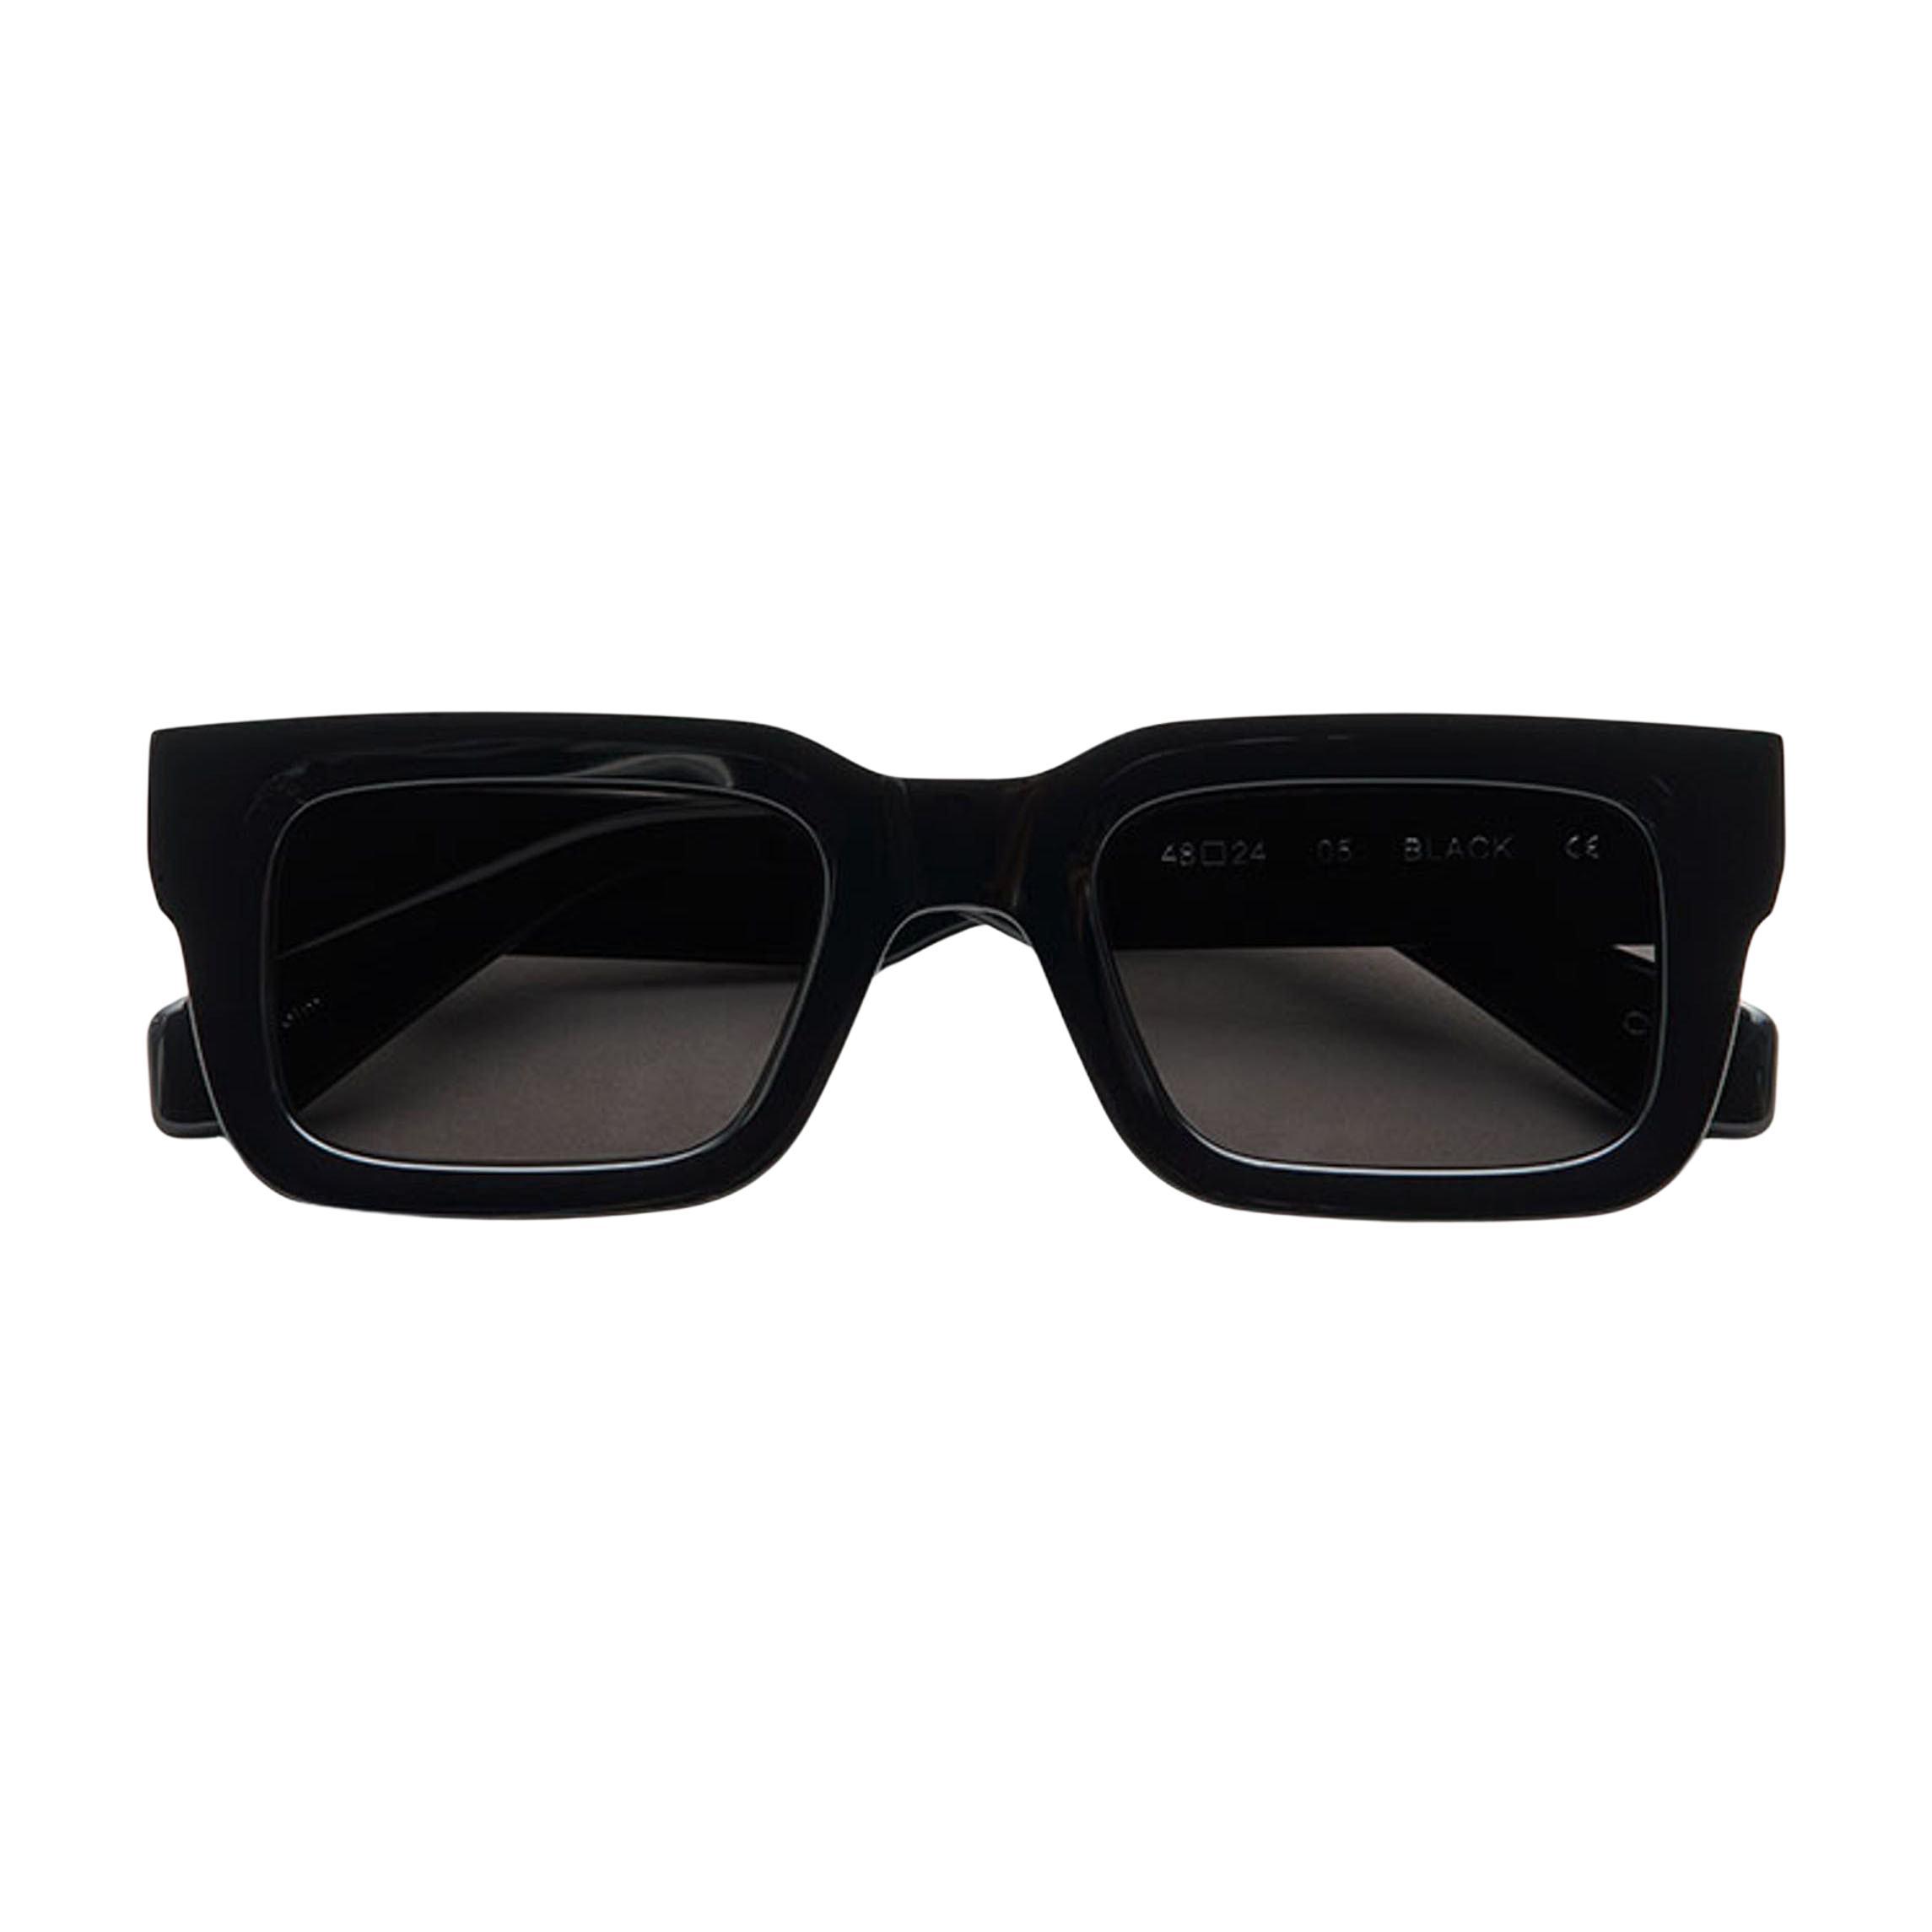 Chimi's Model 05 Black Gradient Lenses Sunglasses 48mm providing UV protection on a white background.